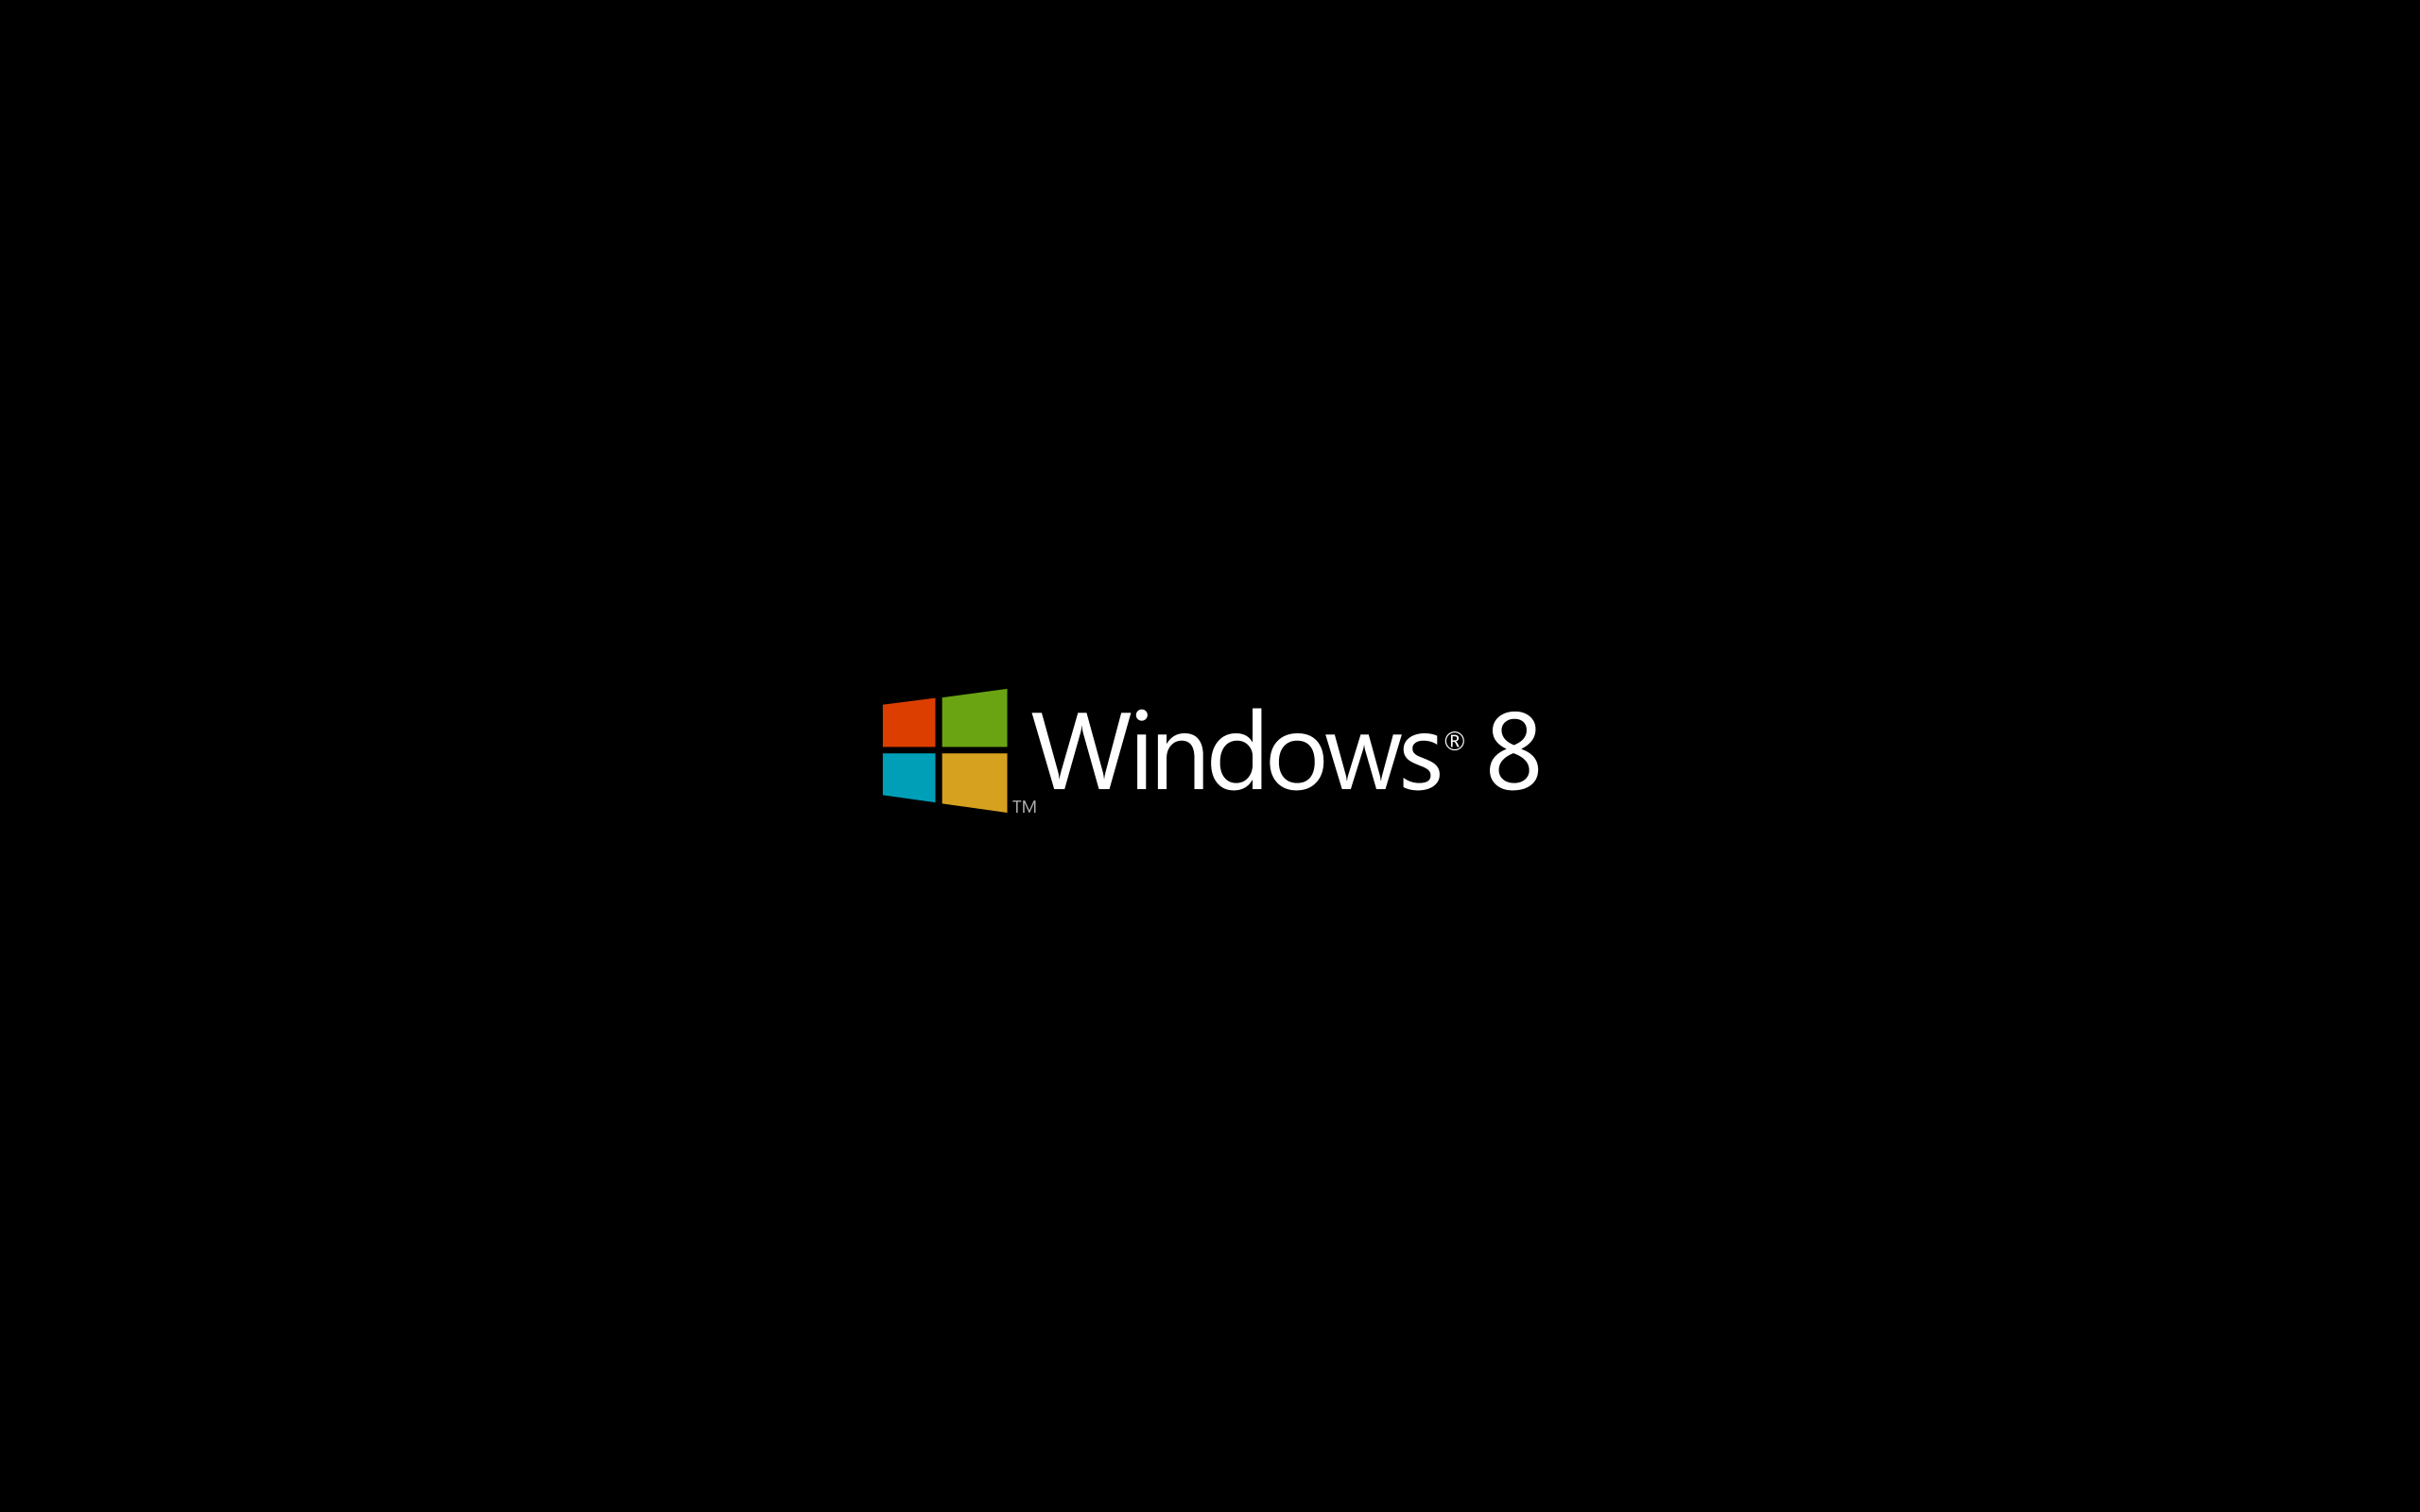 General 2560x1600 Windows 8 Microsoft Windows operating system minimalism black black background simple background